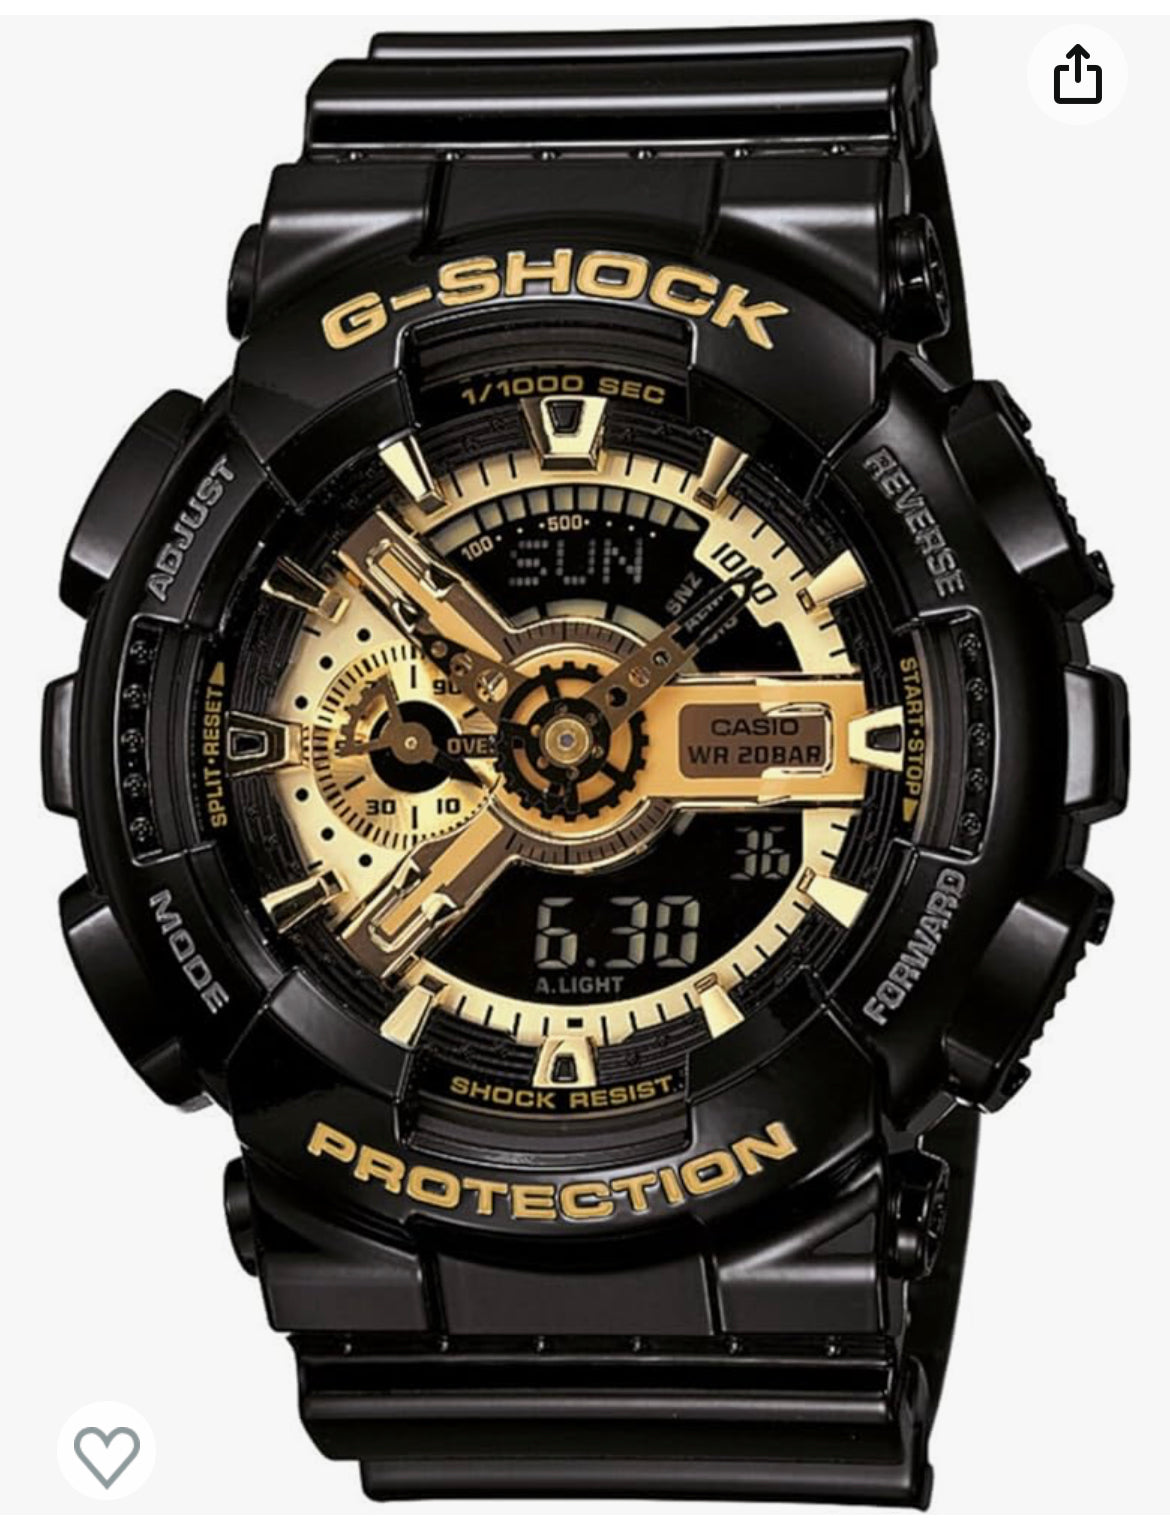 A25) Casio G-Shock Quartz Hybrid Black Dial Men's Watch GA110B-1A